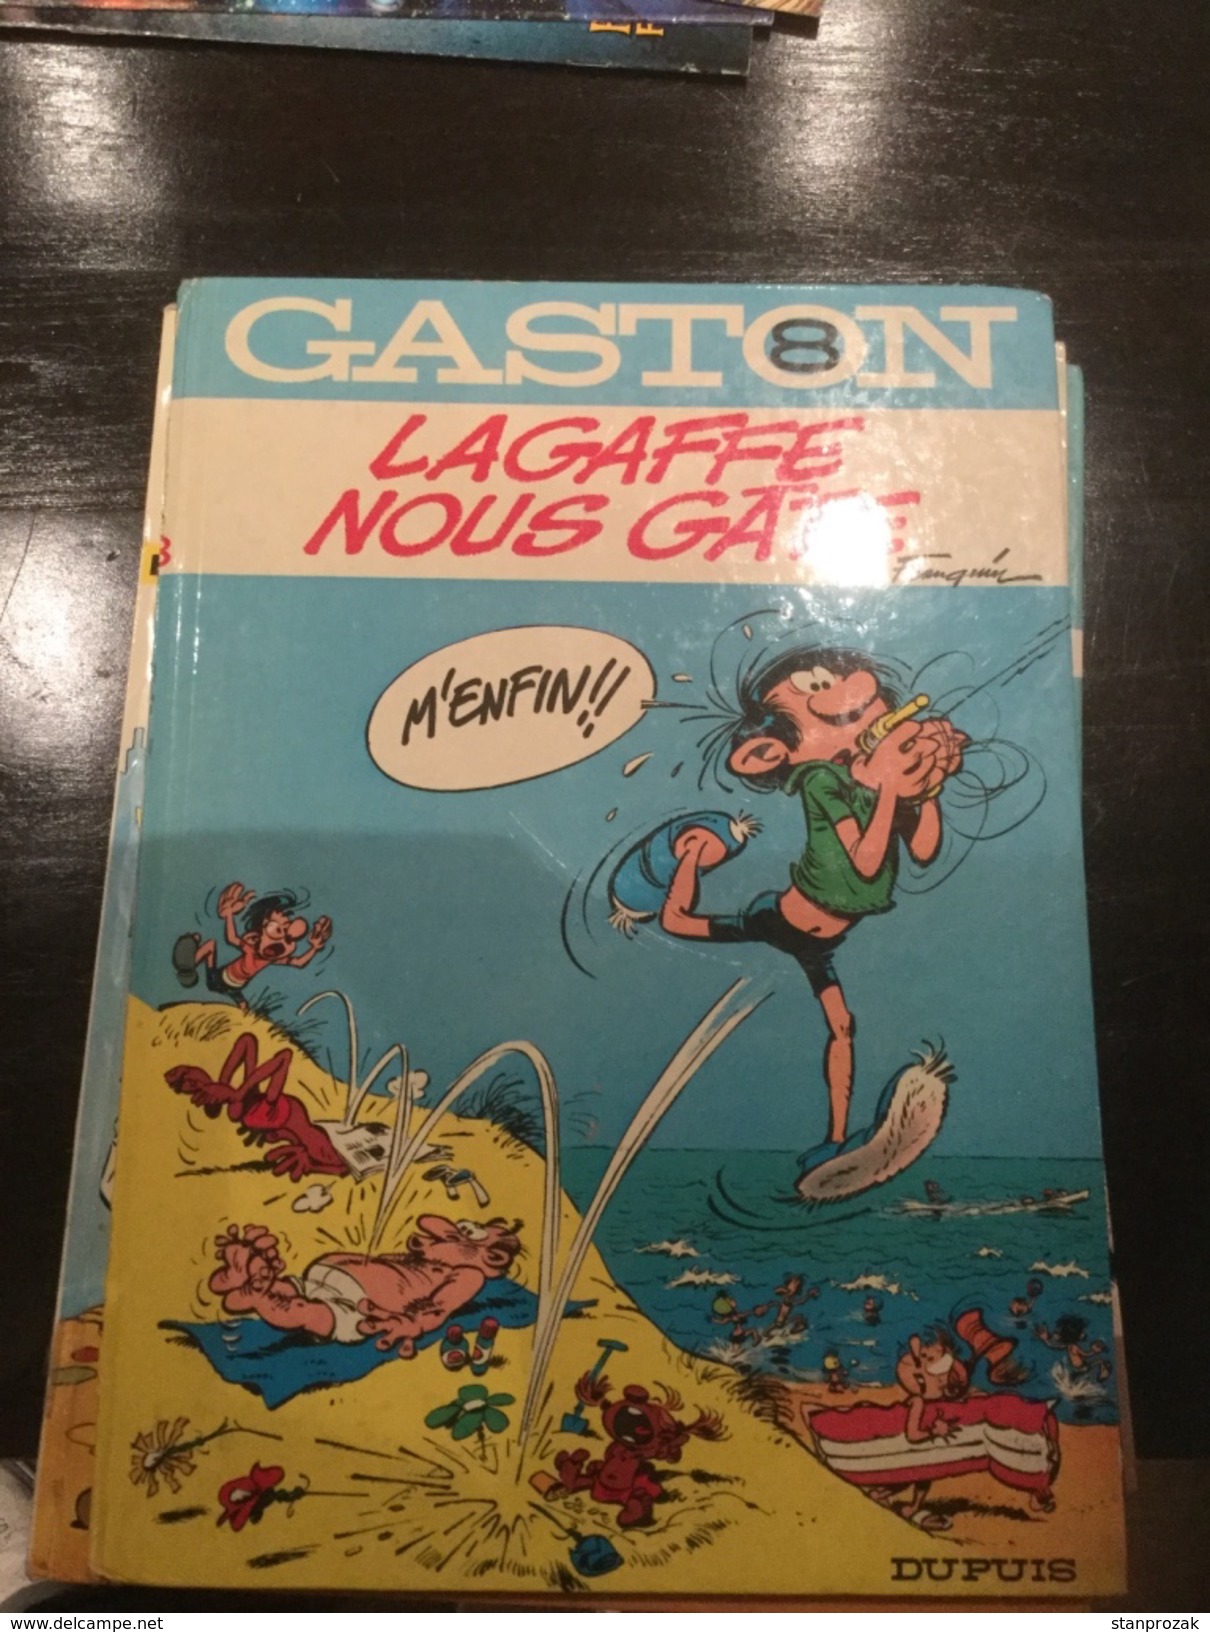 Gaston Lagaffe Nous Gâte Dos Rond - Gaston